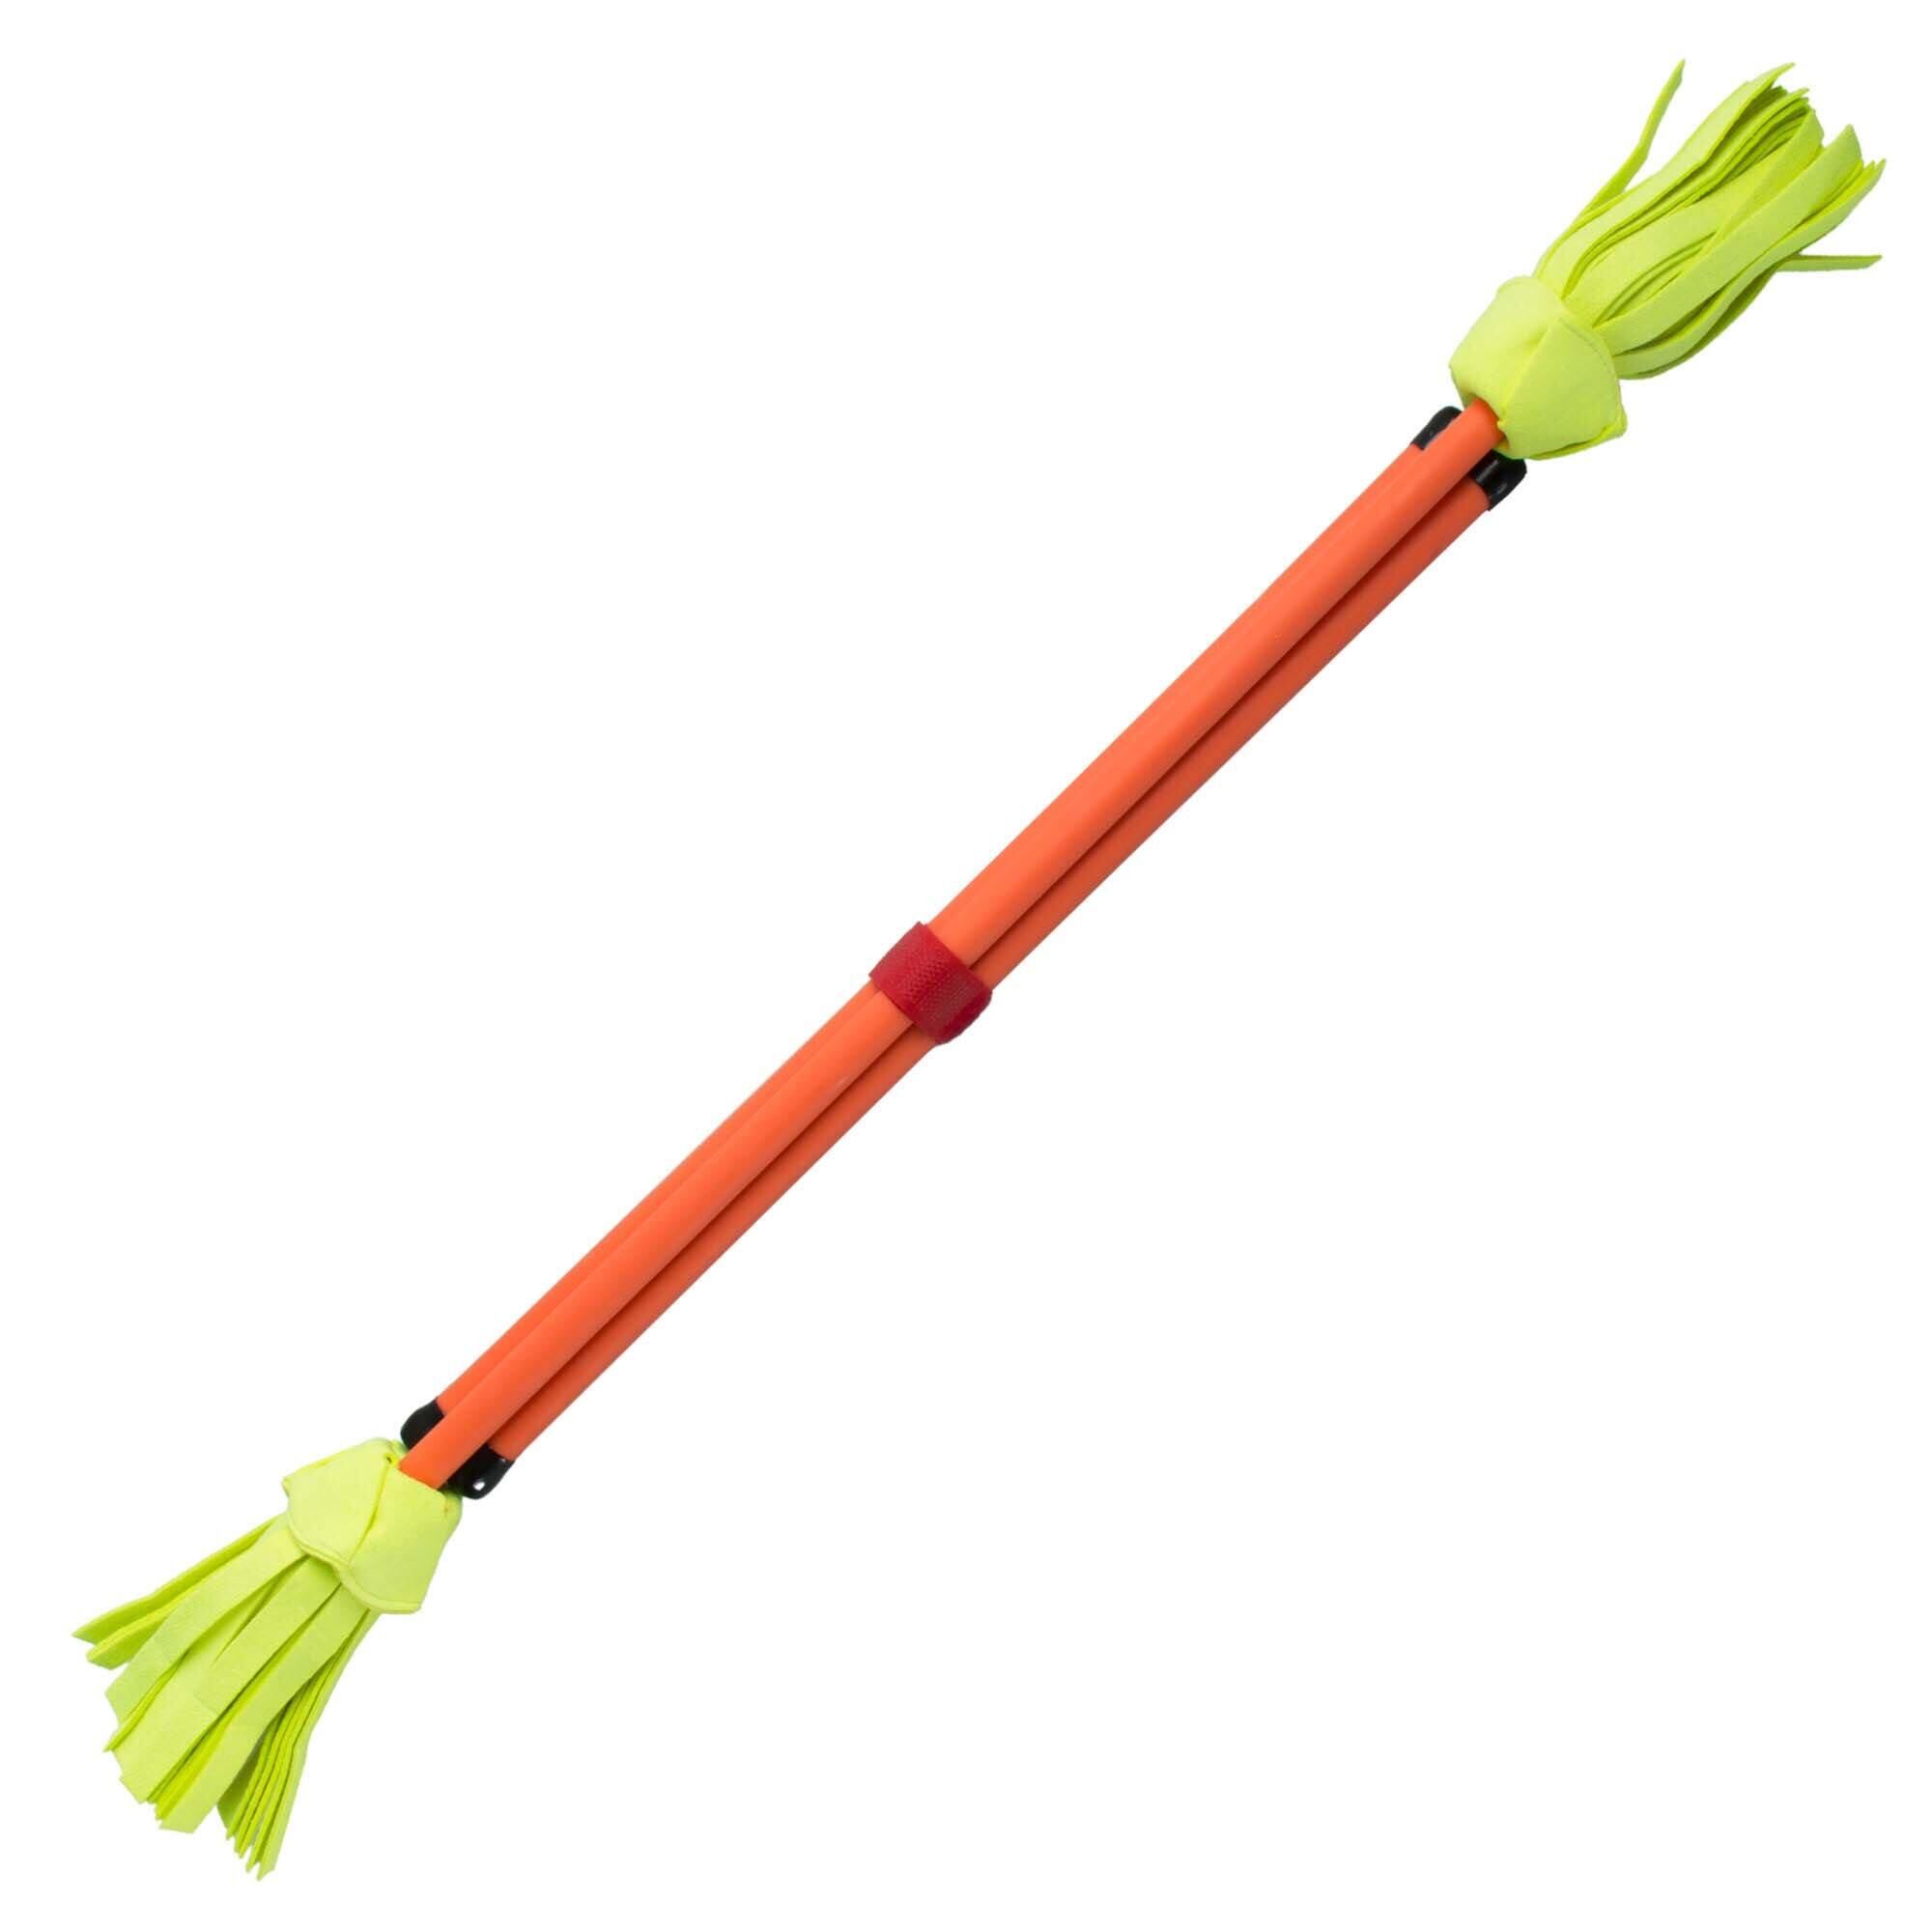 FIRETOYS Neo Fluoro Flower Stick and Hand Sticks-Orange with Yellow Tassels